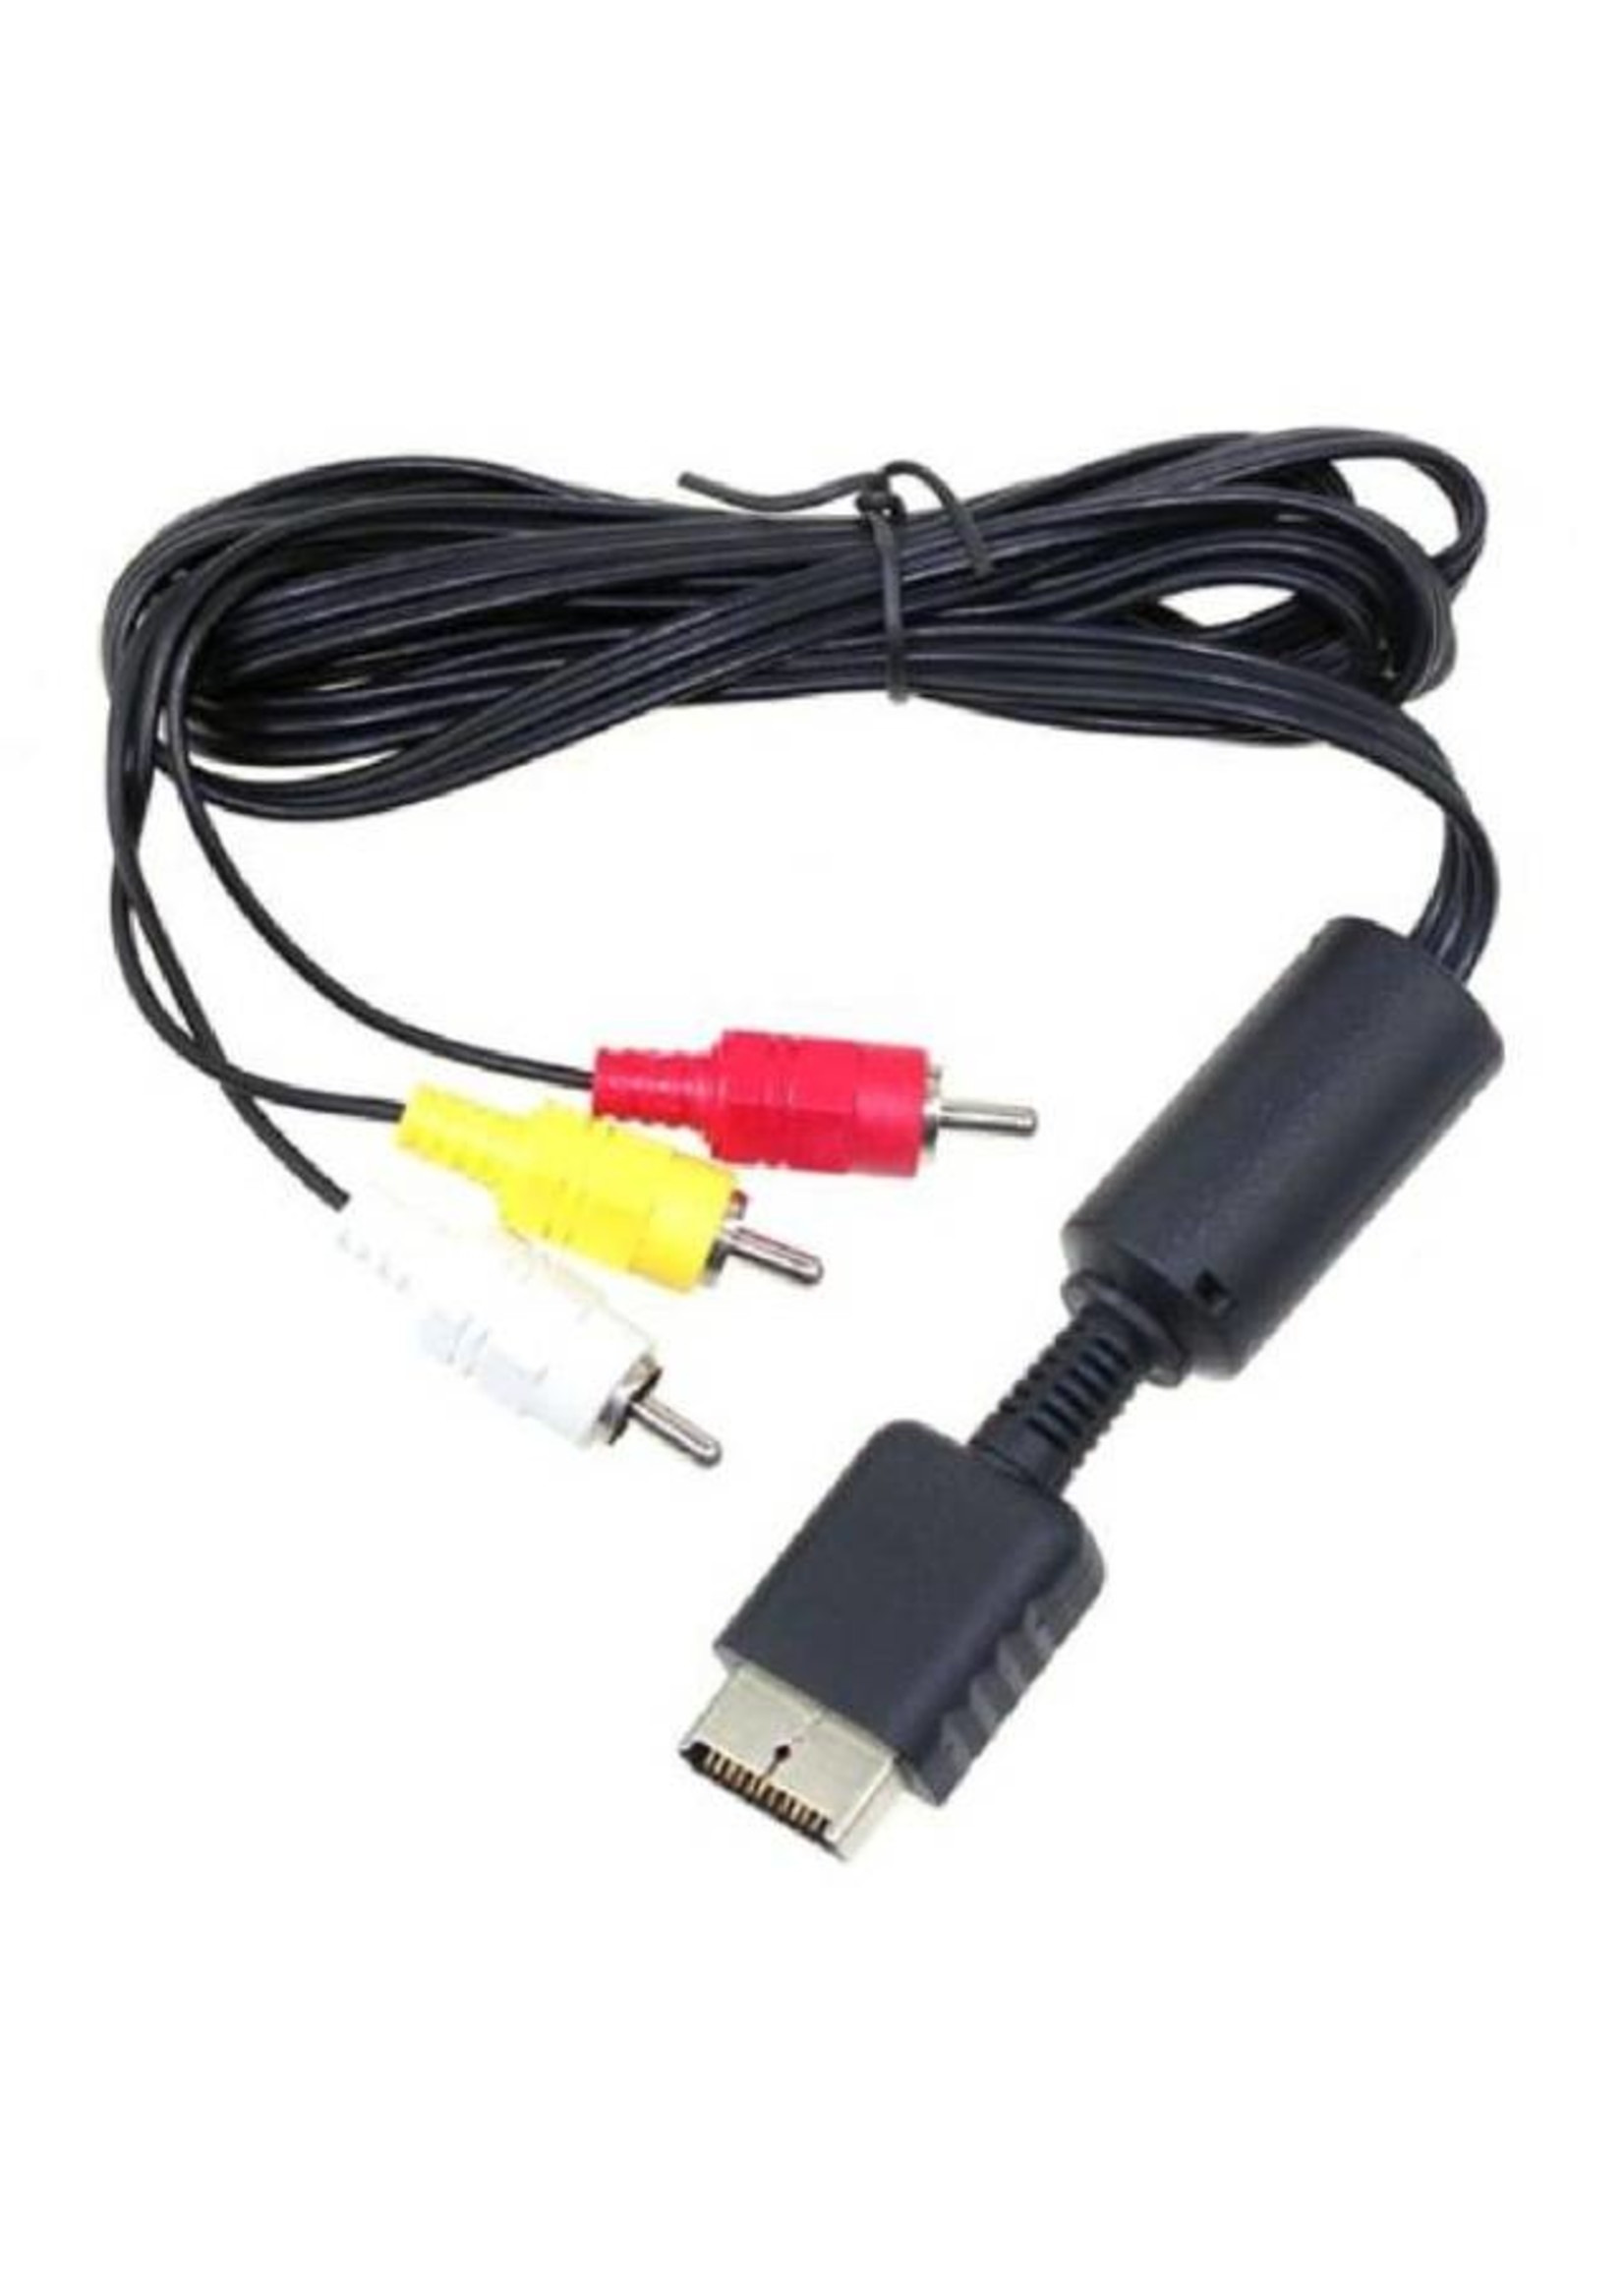 PS2 / PS3  AV Cable